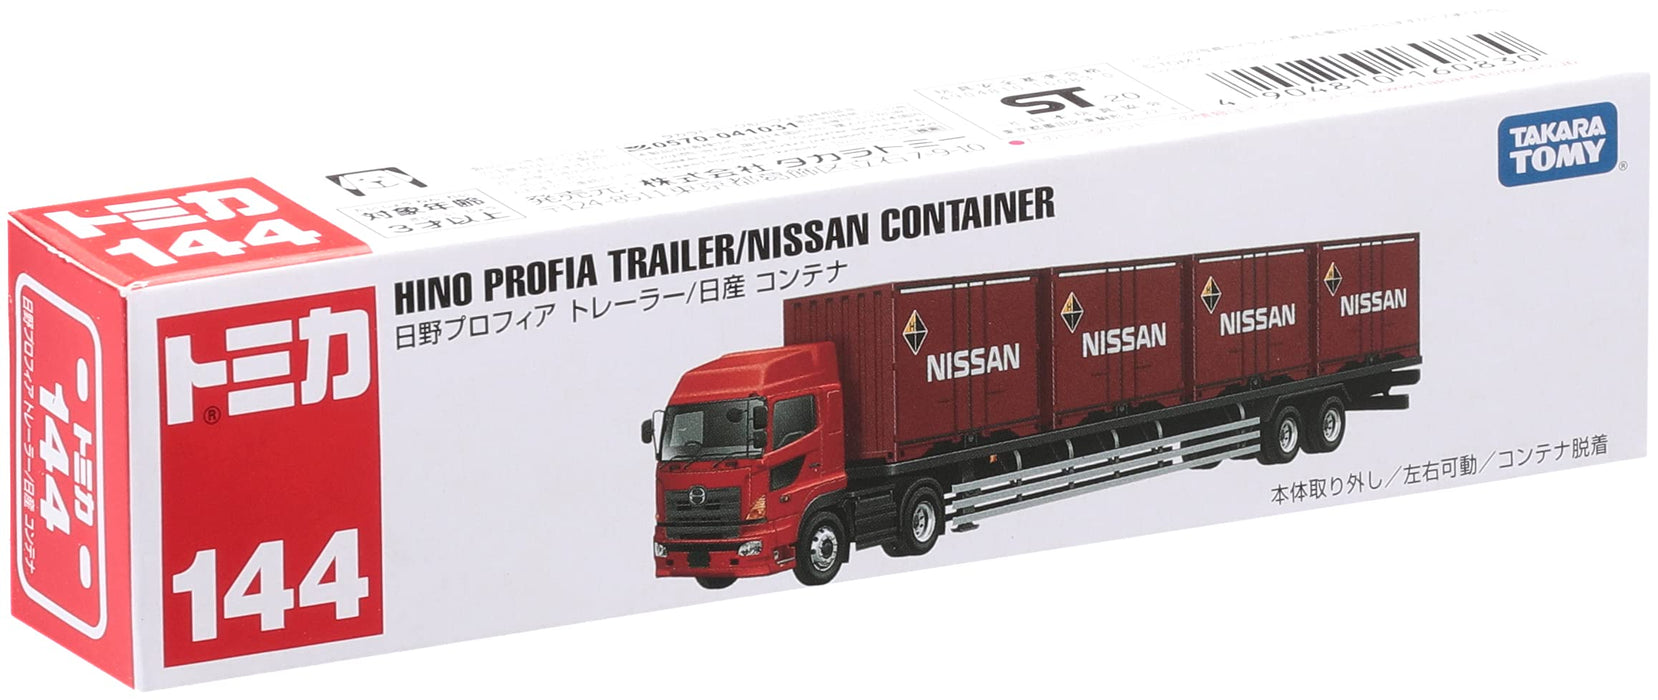 TAKARA TOMY Tomica Hino Profia Anhänger/Nissan Container